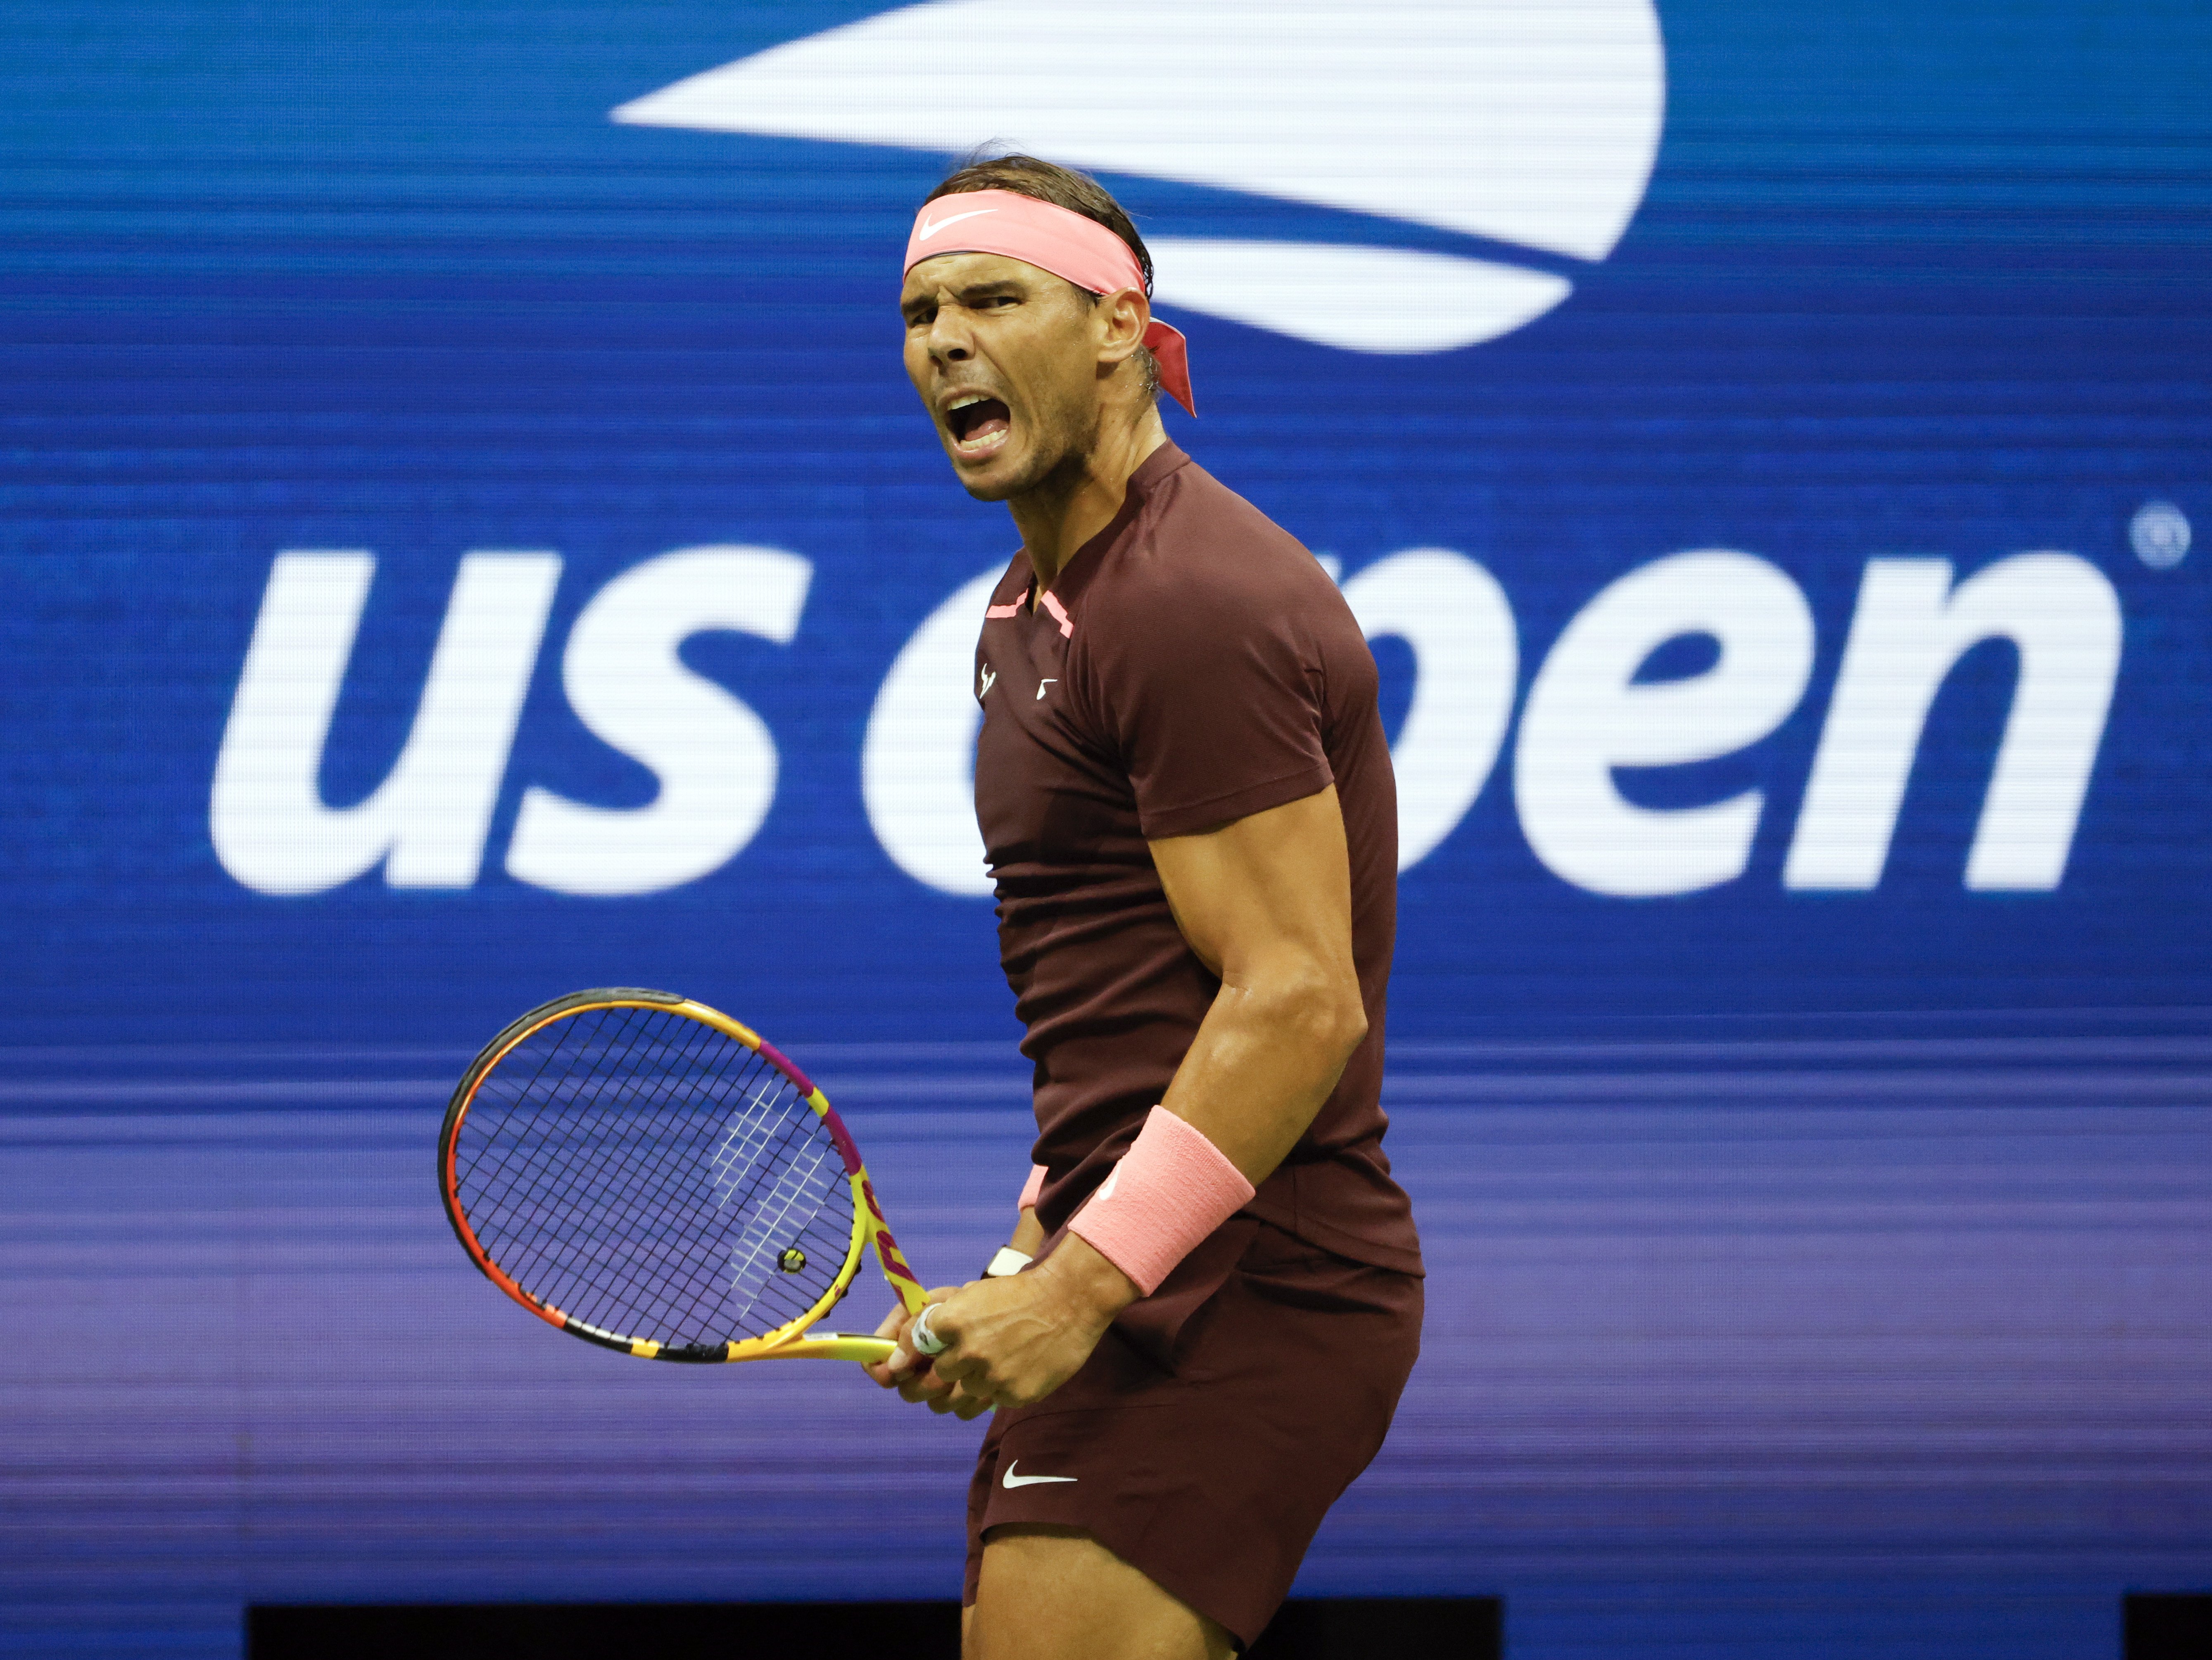 La tercera ronda del US Open espera a Rafa Nadal y a Carlos Alcaraz pero se olvida de Paula Badosa